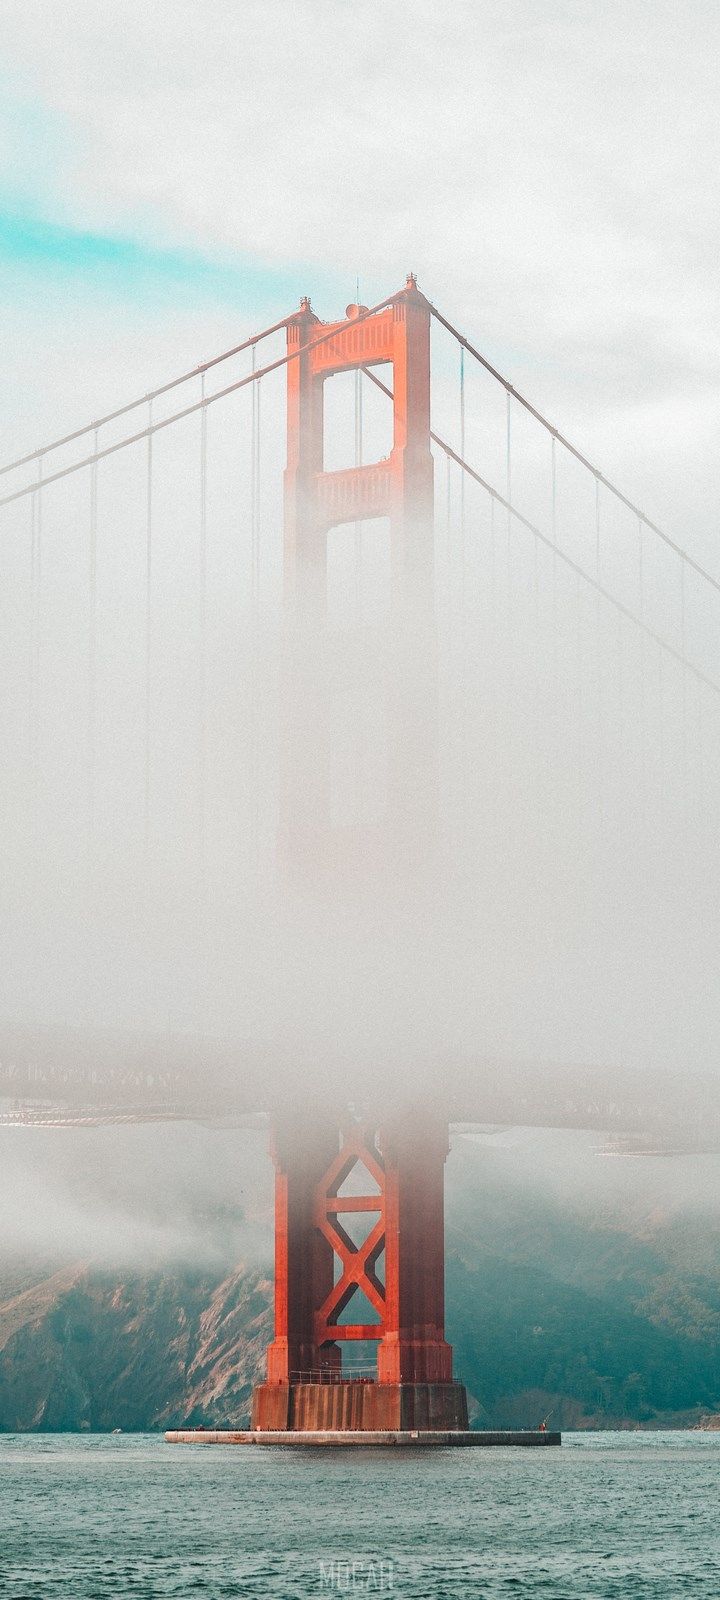 A bridge is in the fog - Fog